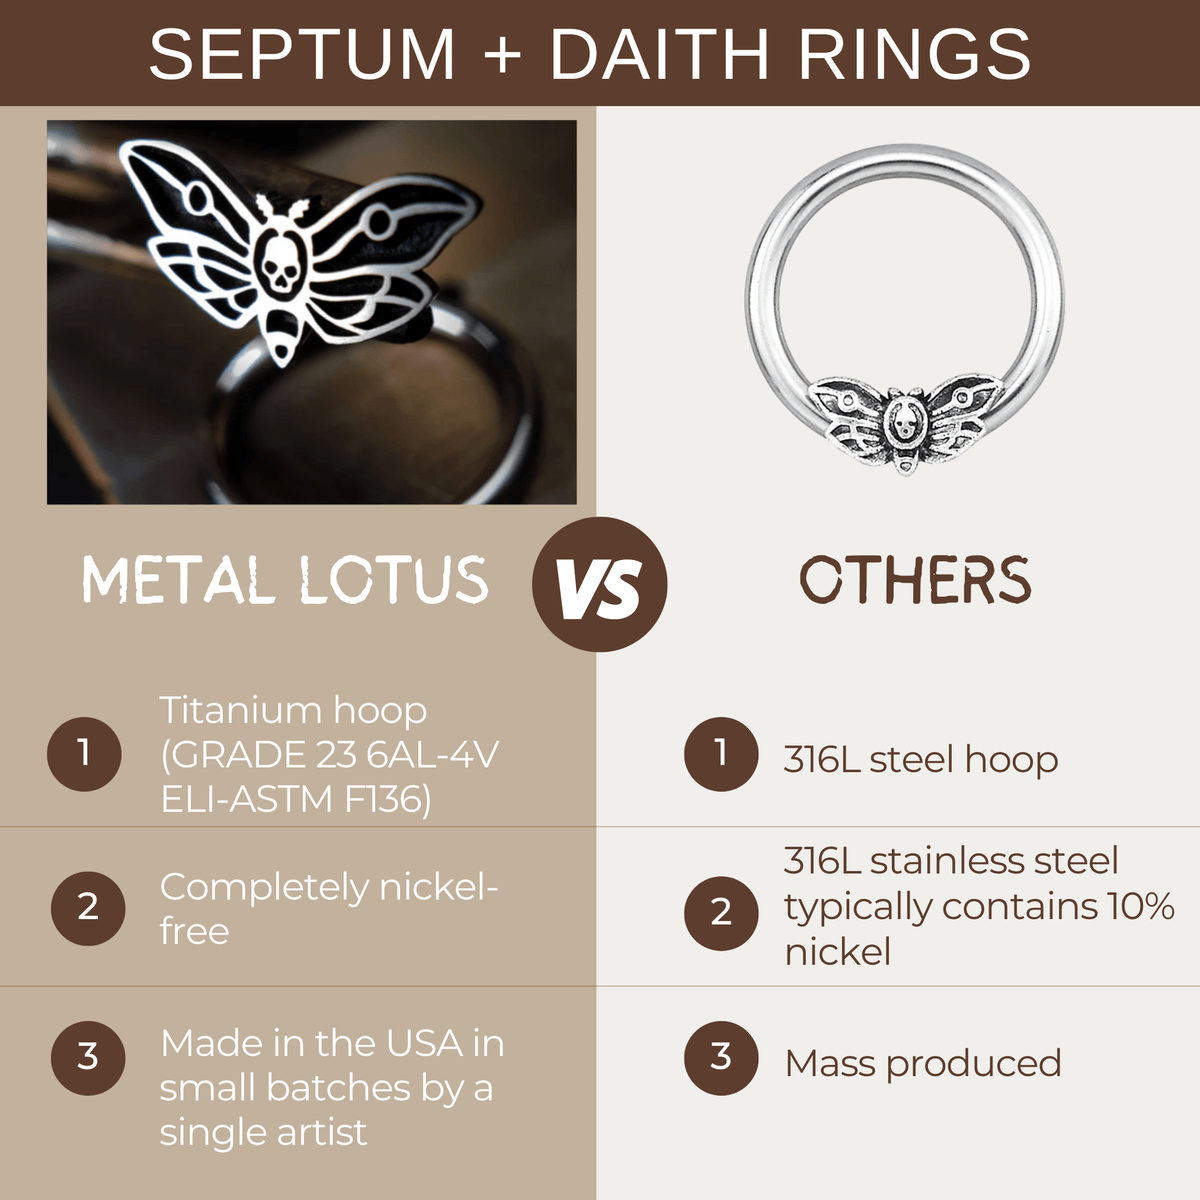 Scorpion Septum + Daith Ring - Metal Lotus